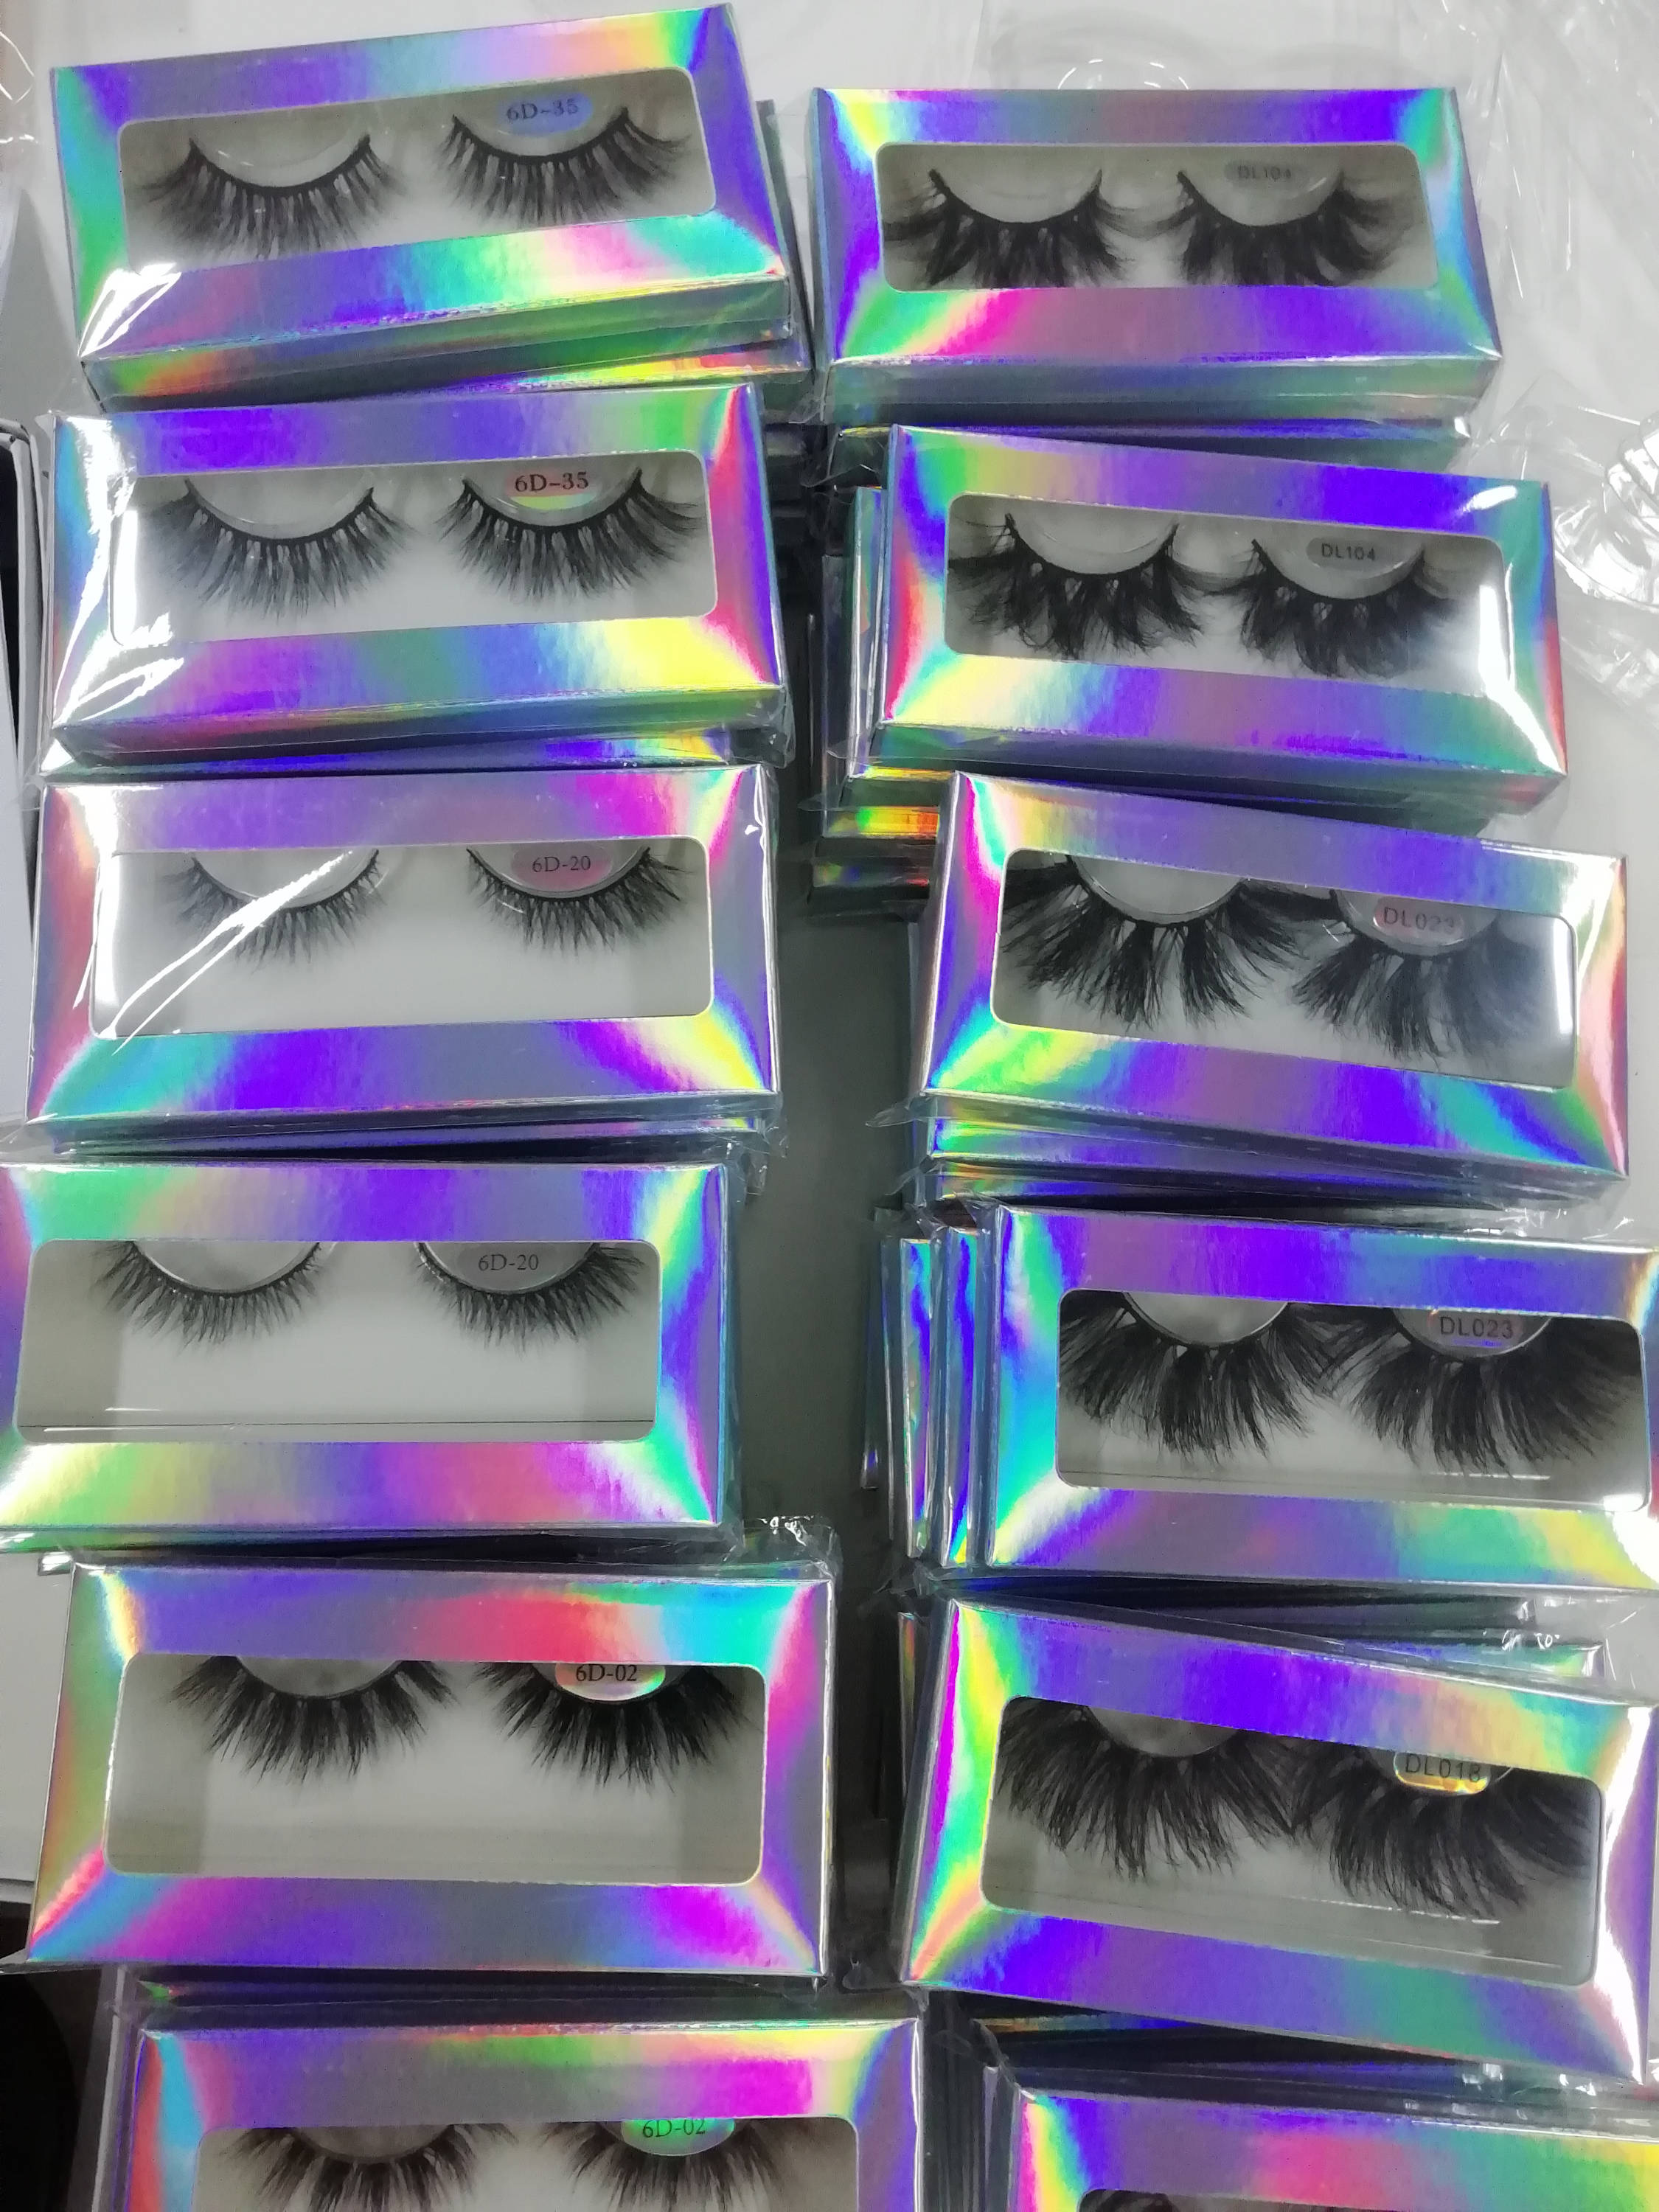 wholesale lashes, Mink eyelashes Bulk Vendor 6D, 25mm